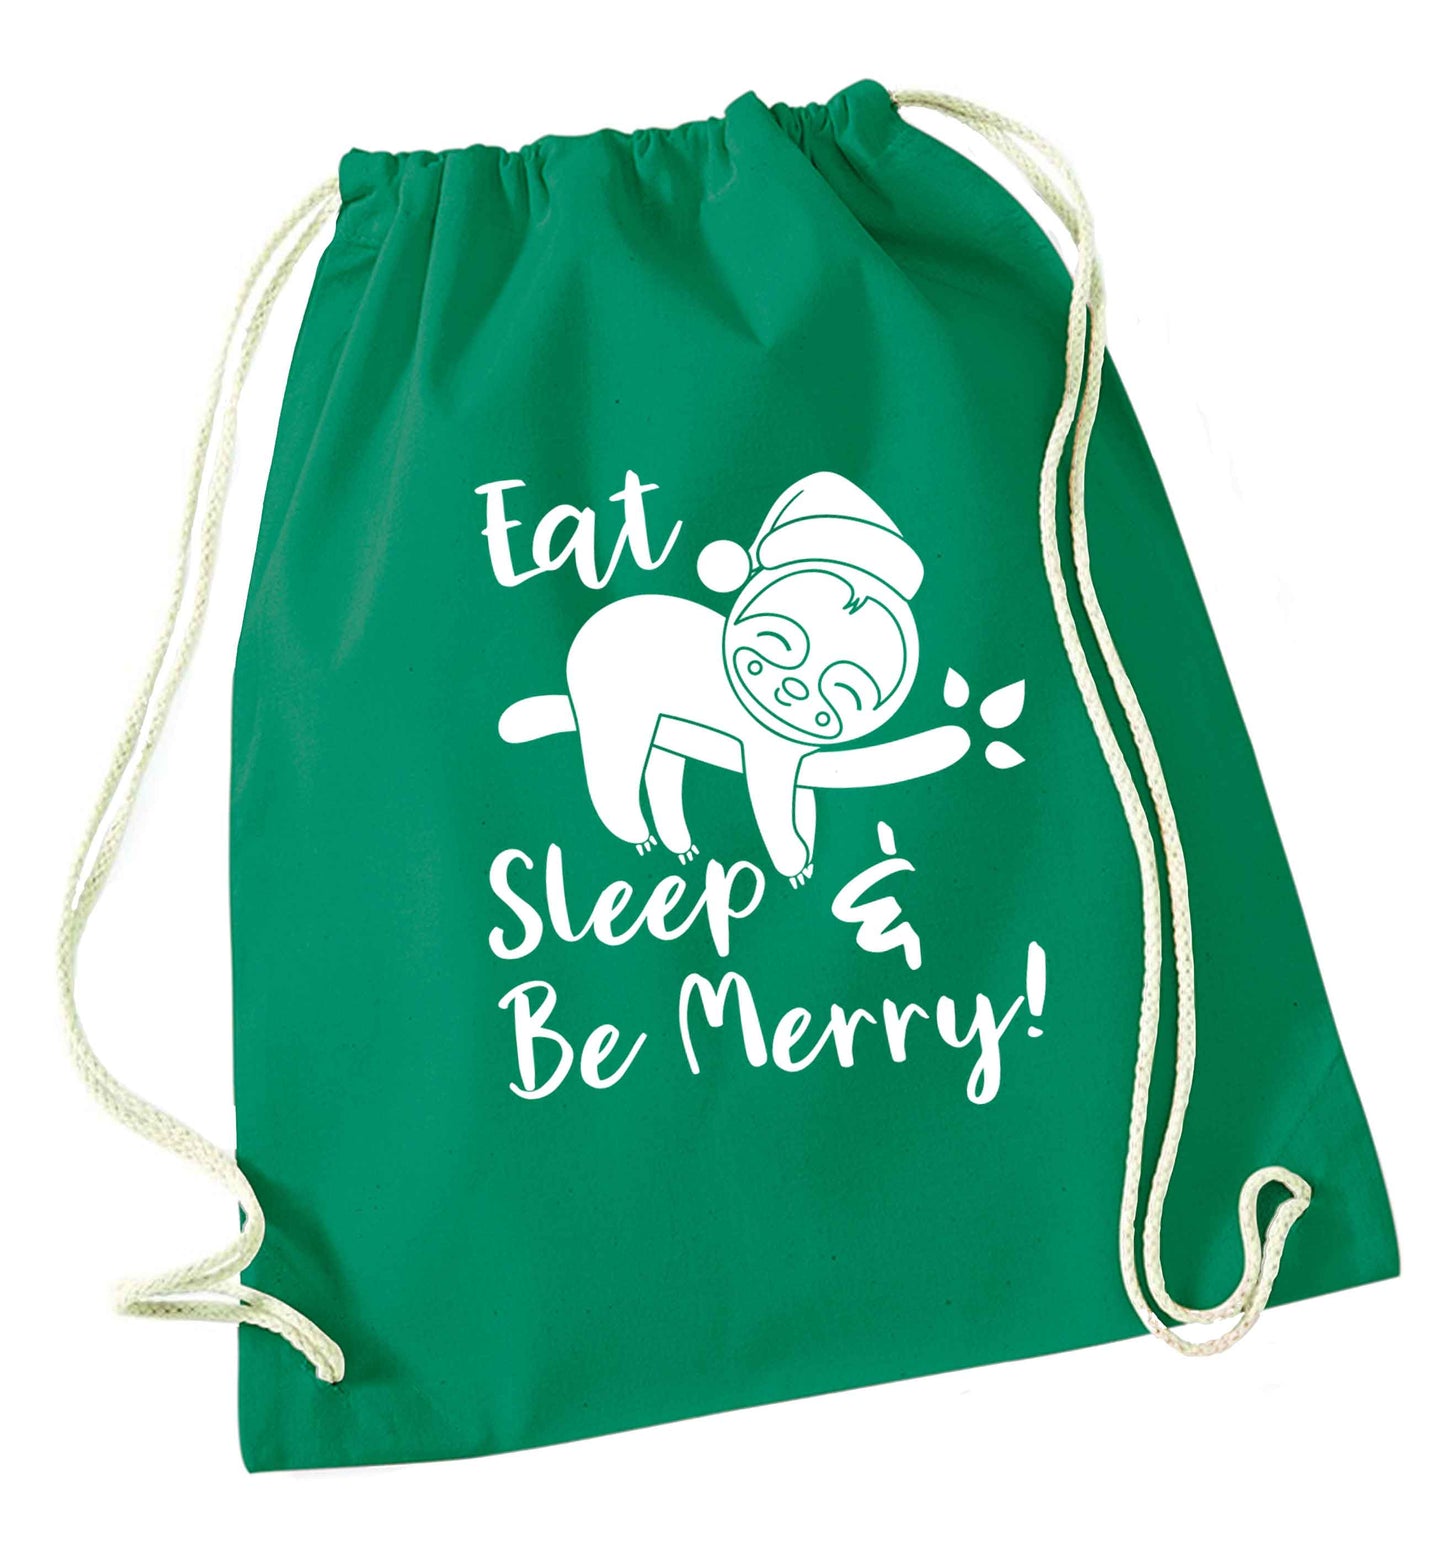 Merry Slothmas green drawstring bag